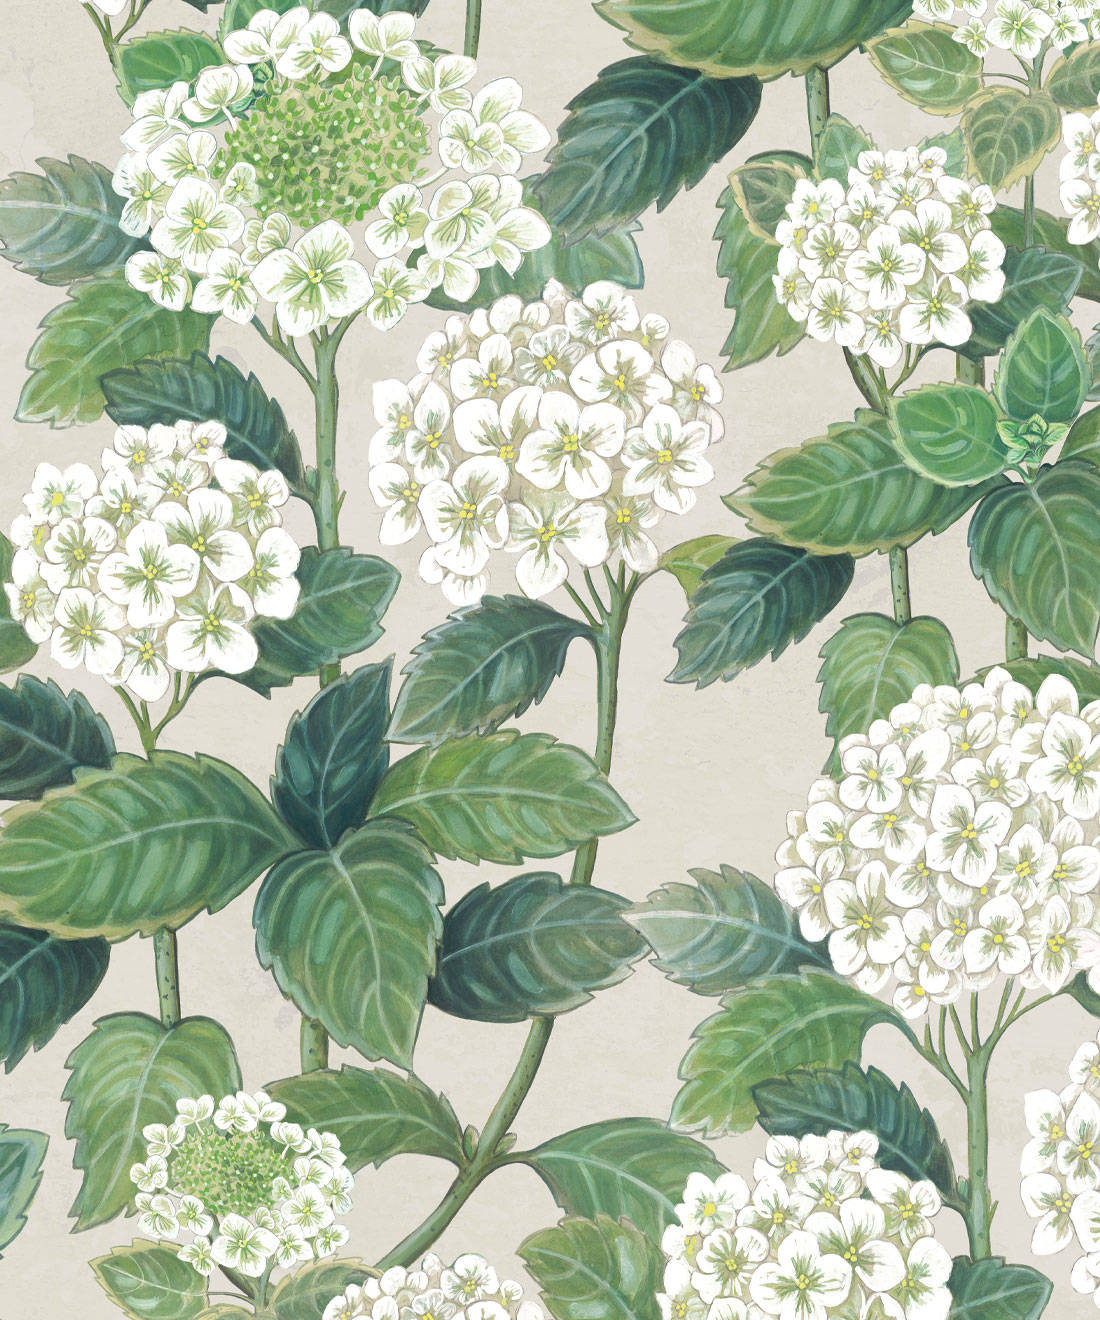 White Hydrangea Flowers Illustration Wallpaper